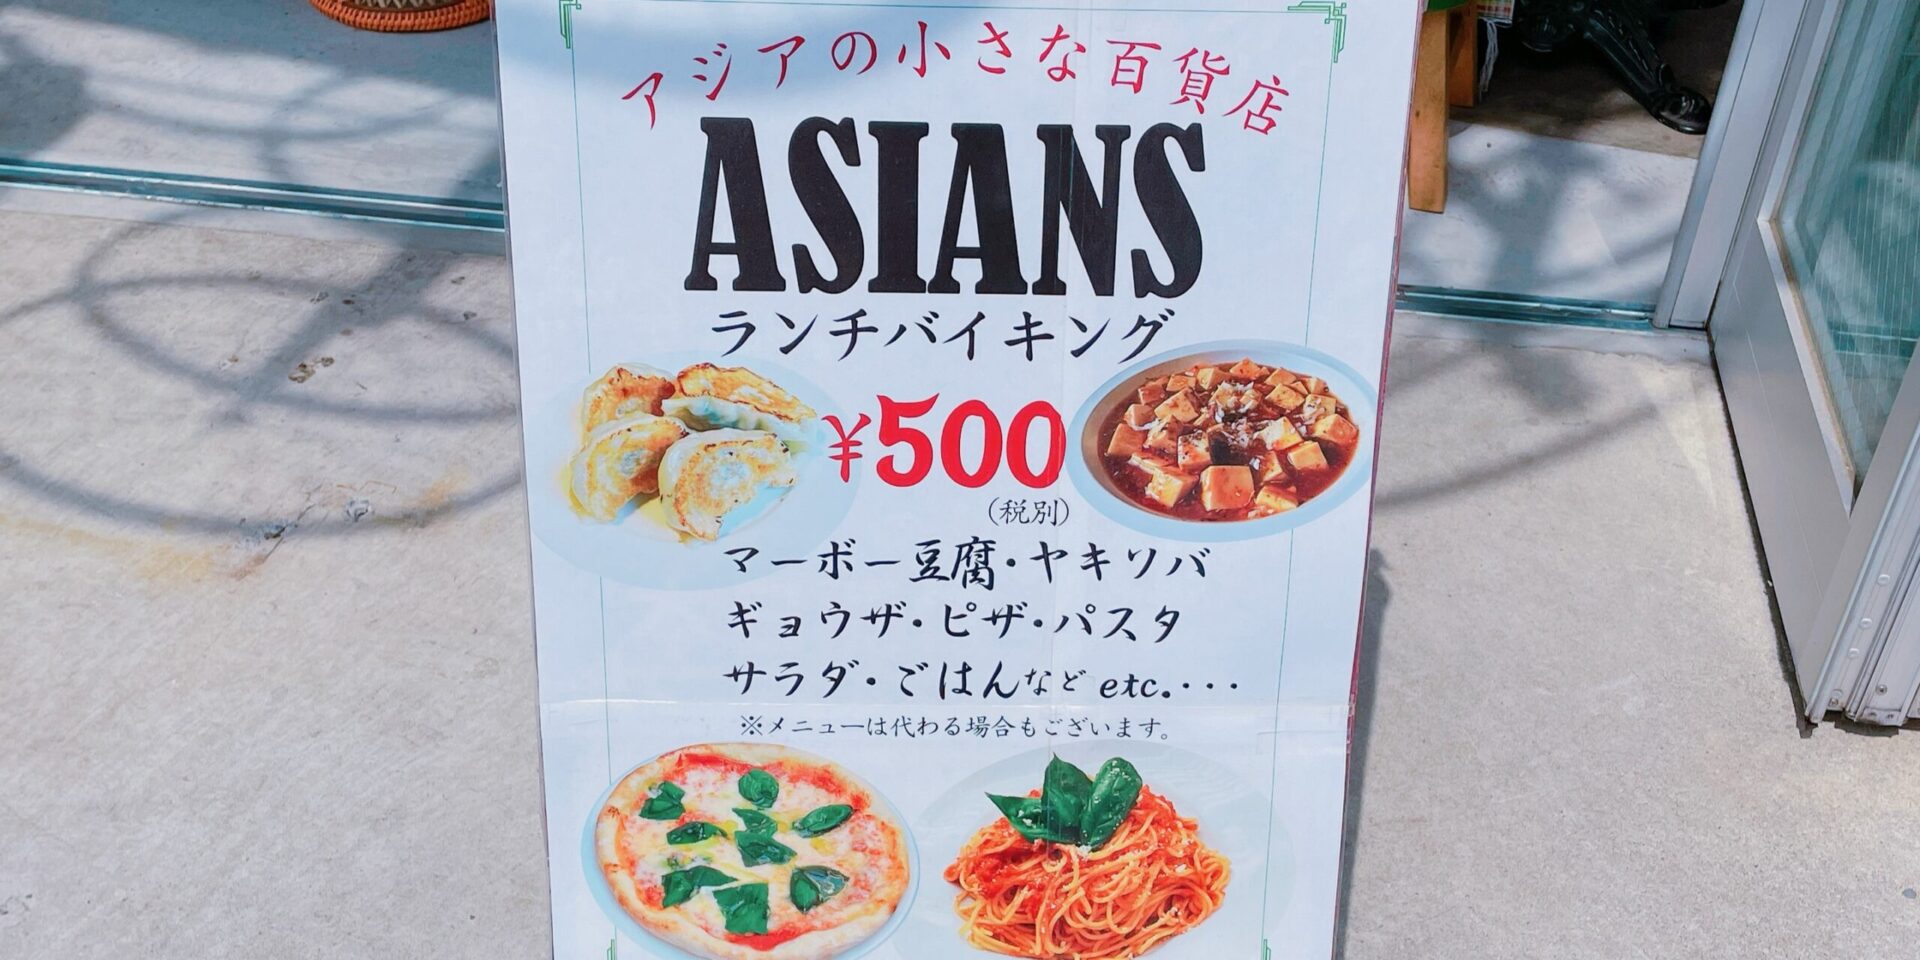 「ASIANS アジアの小さな百貨店」の看板